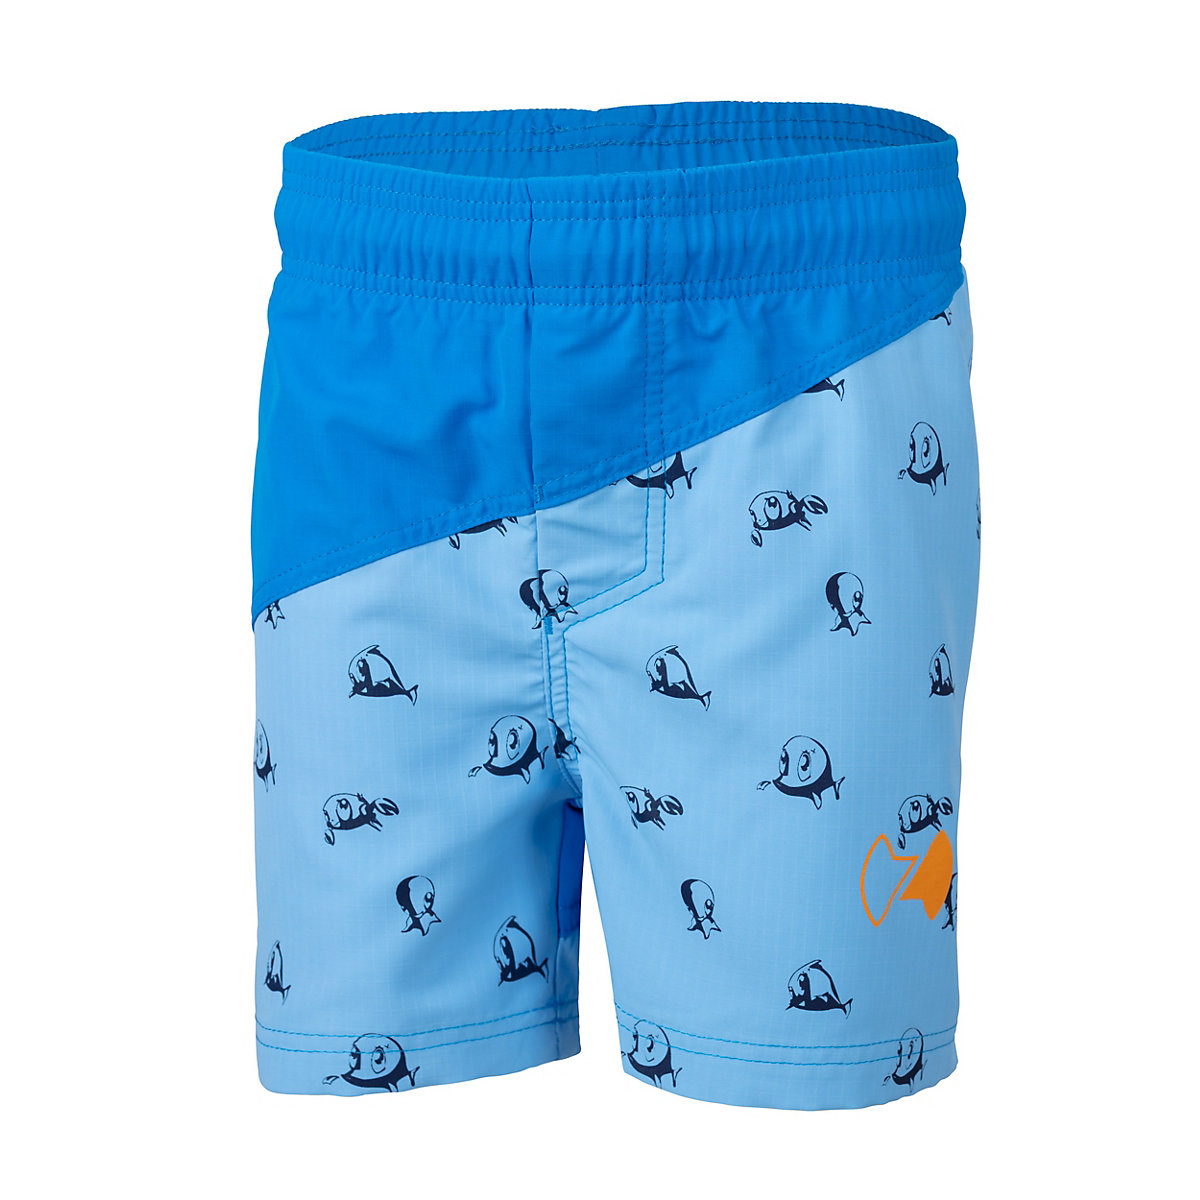 hyphen UV Boardshorts ‘repa‘ für Kinder blau